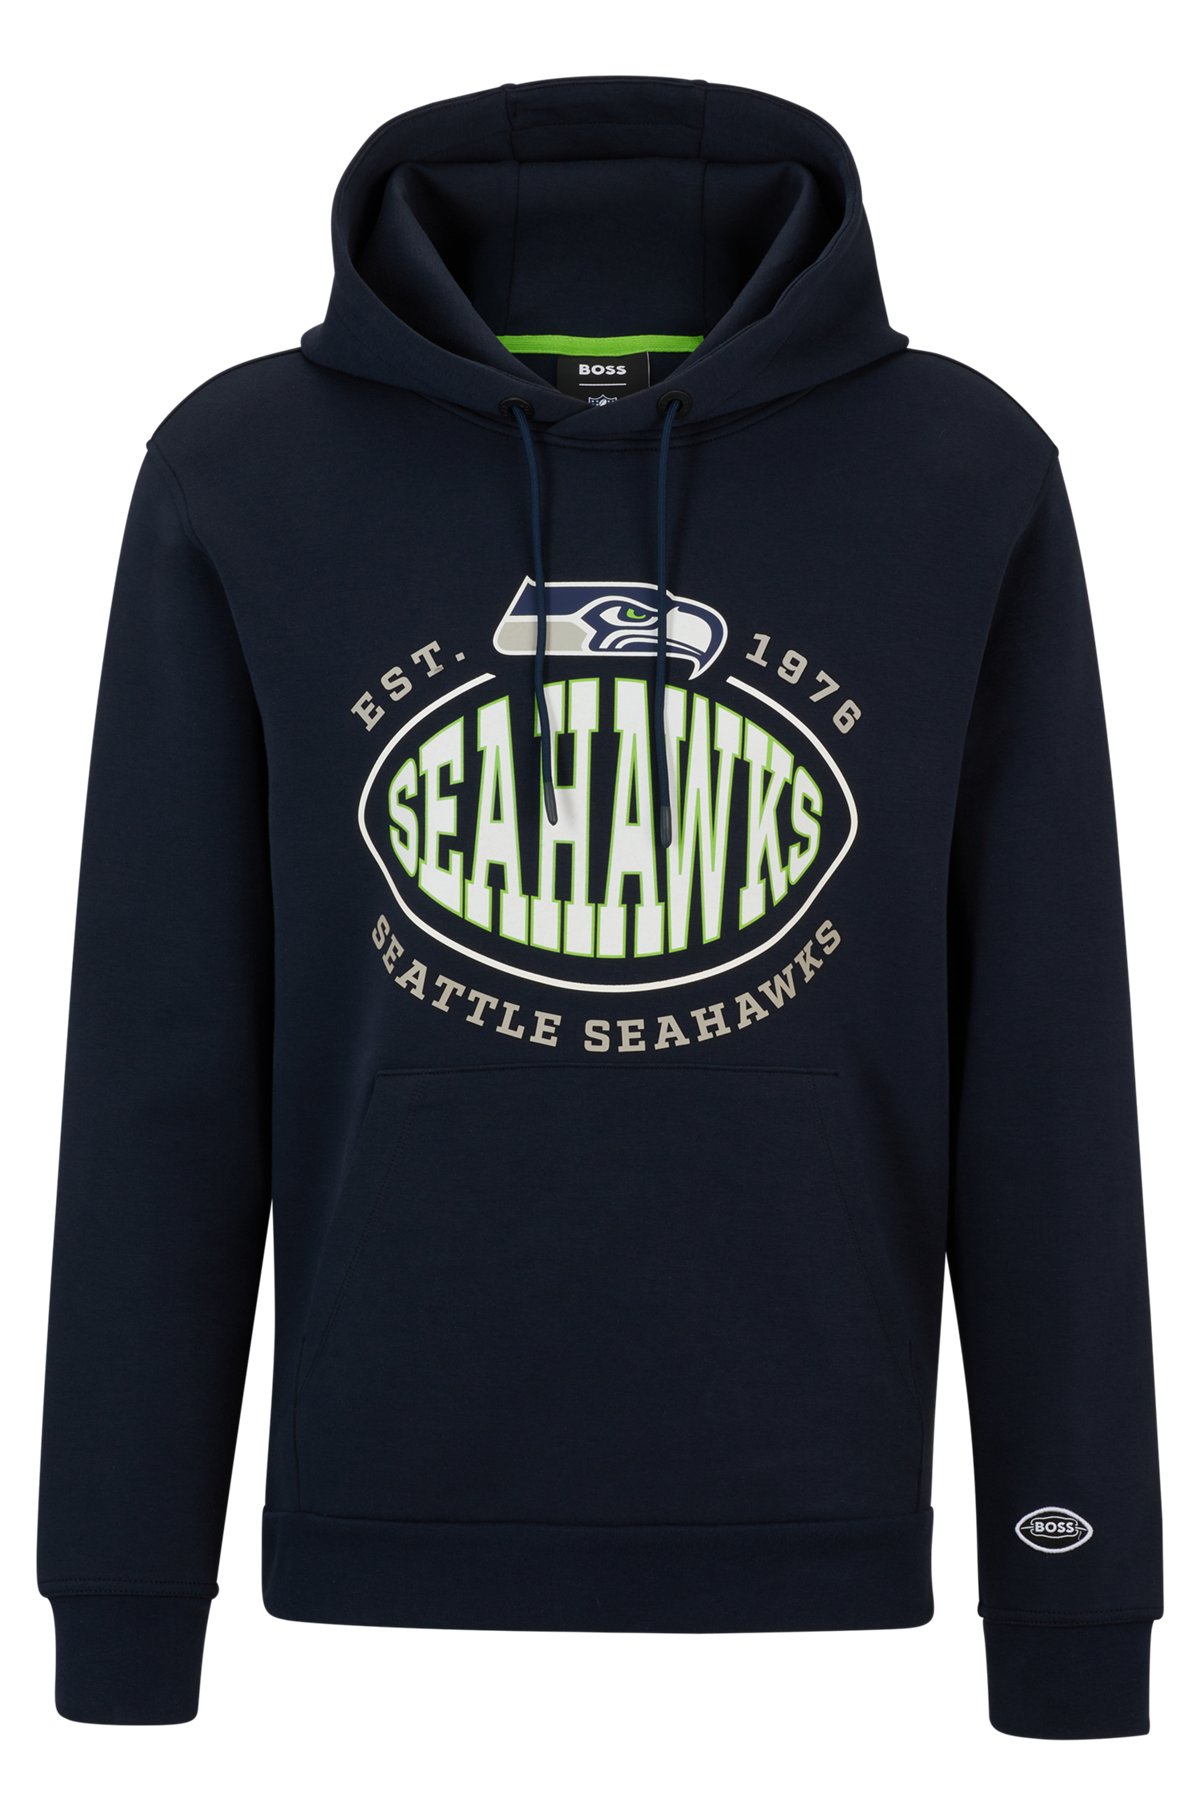 seahawks hooded sweatshirt